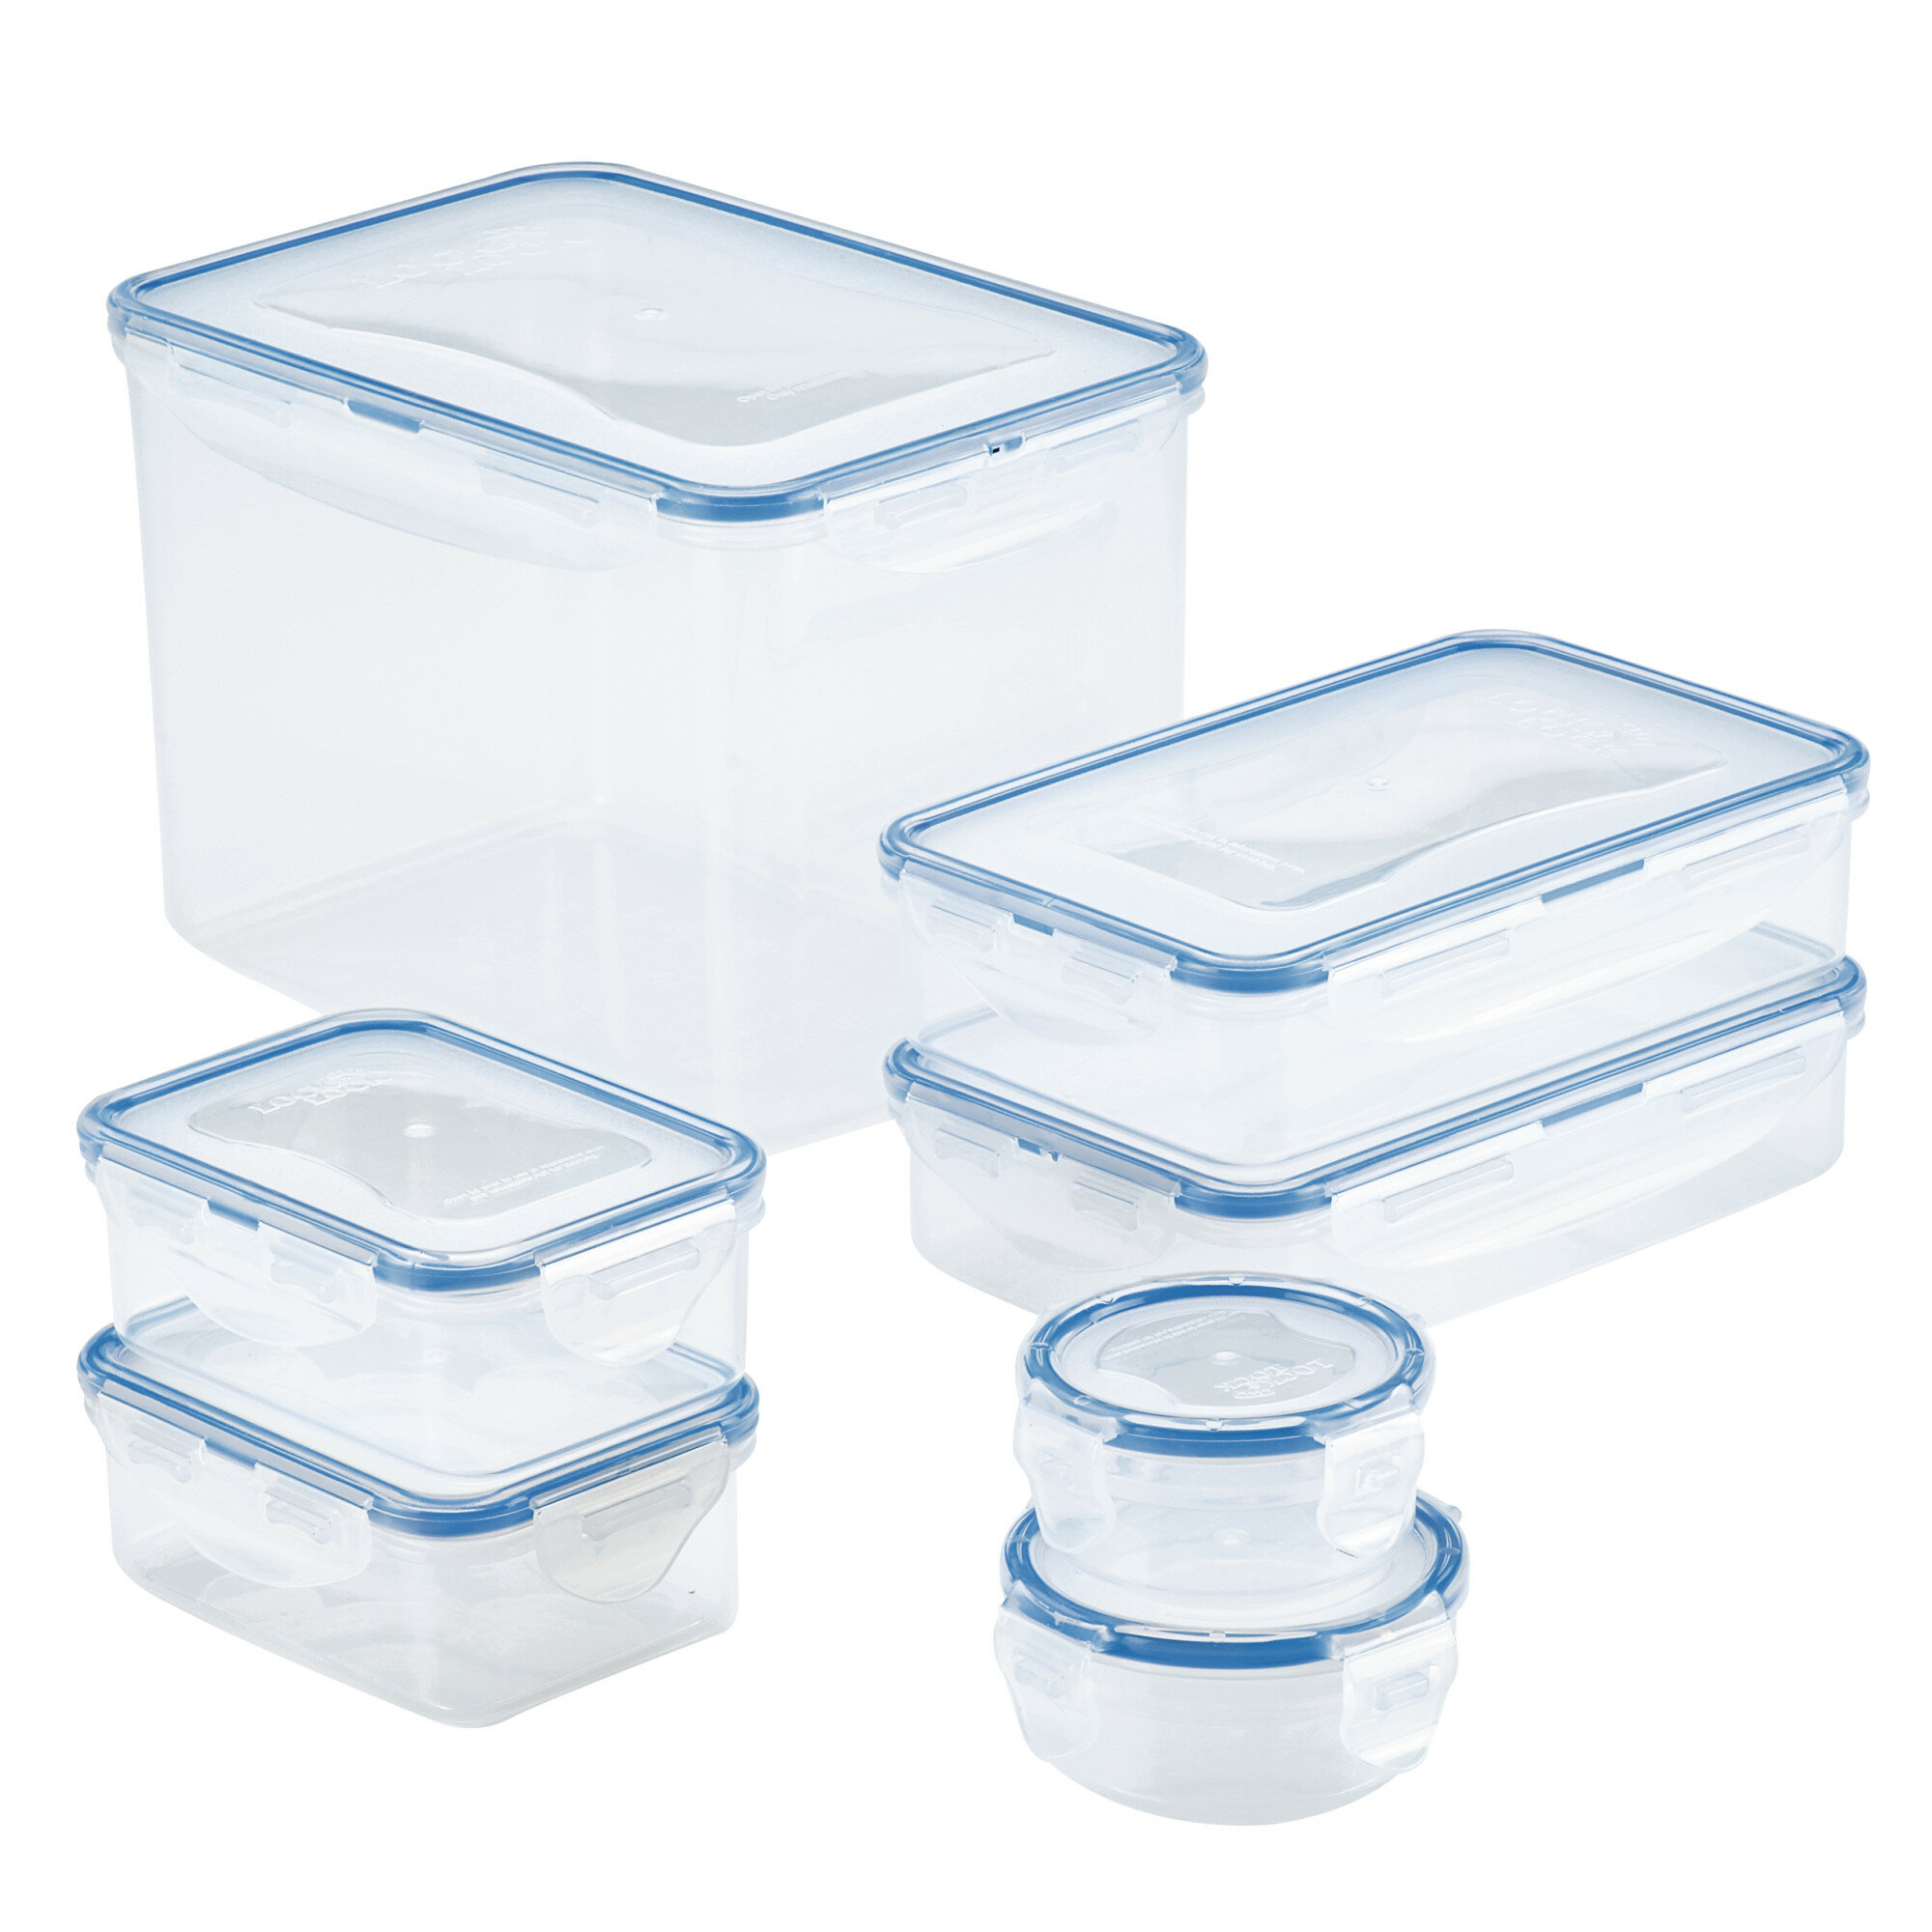 Locknlock Easy Essentials Color Mates Food Storage Container Set